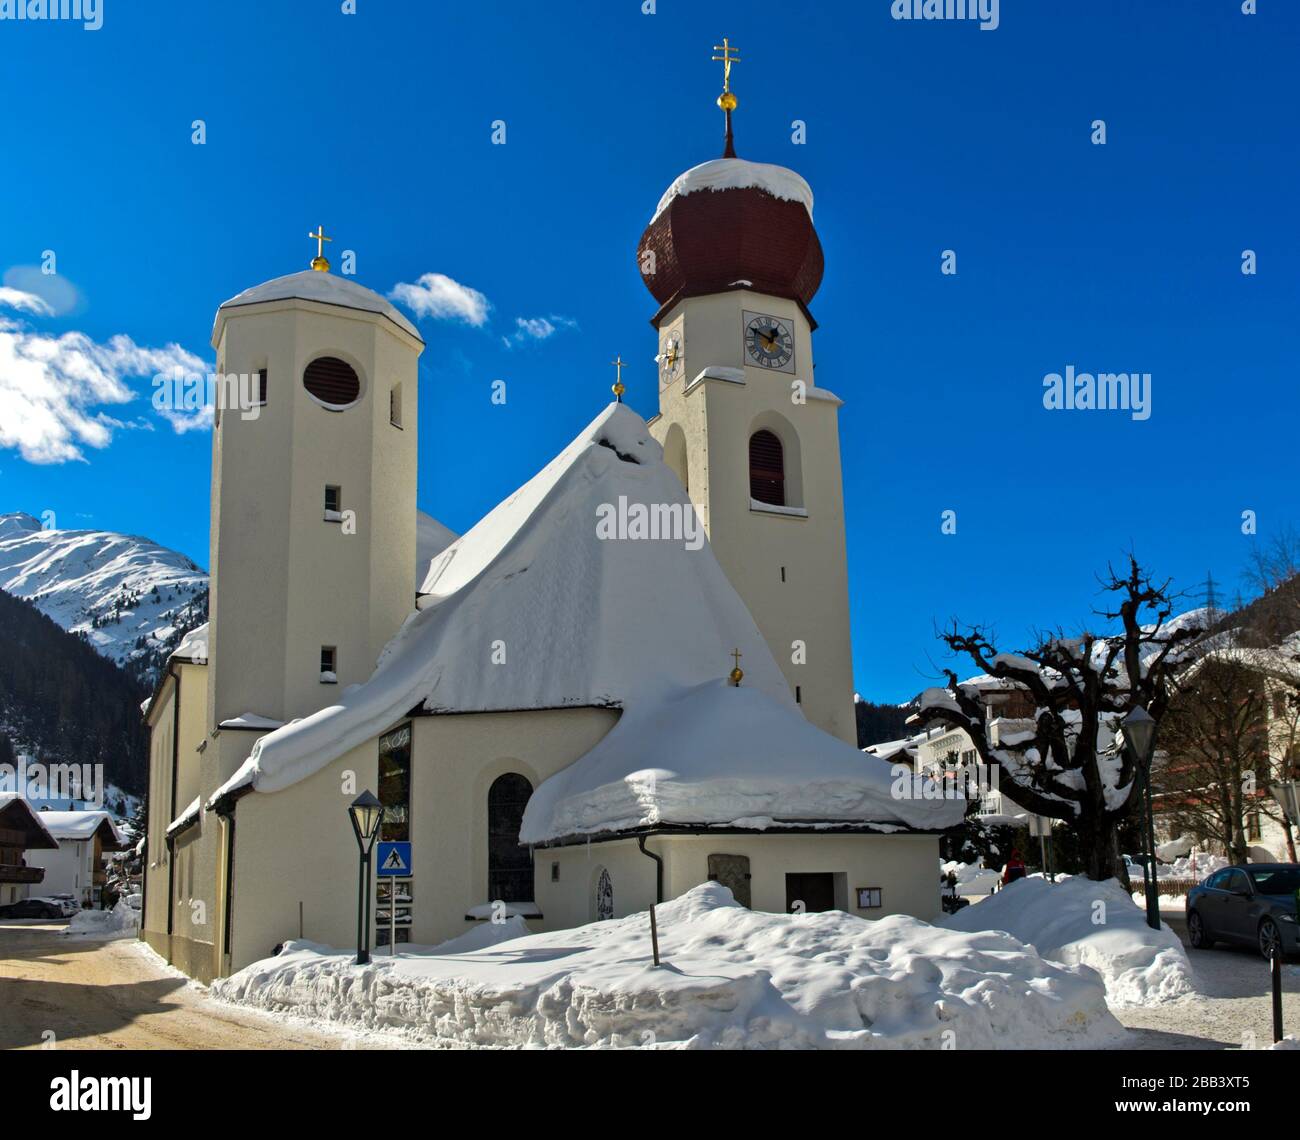 Parish church in St. Anton am Arlberg, Tyrol, Austria. Stock Photo